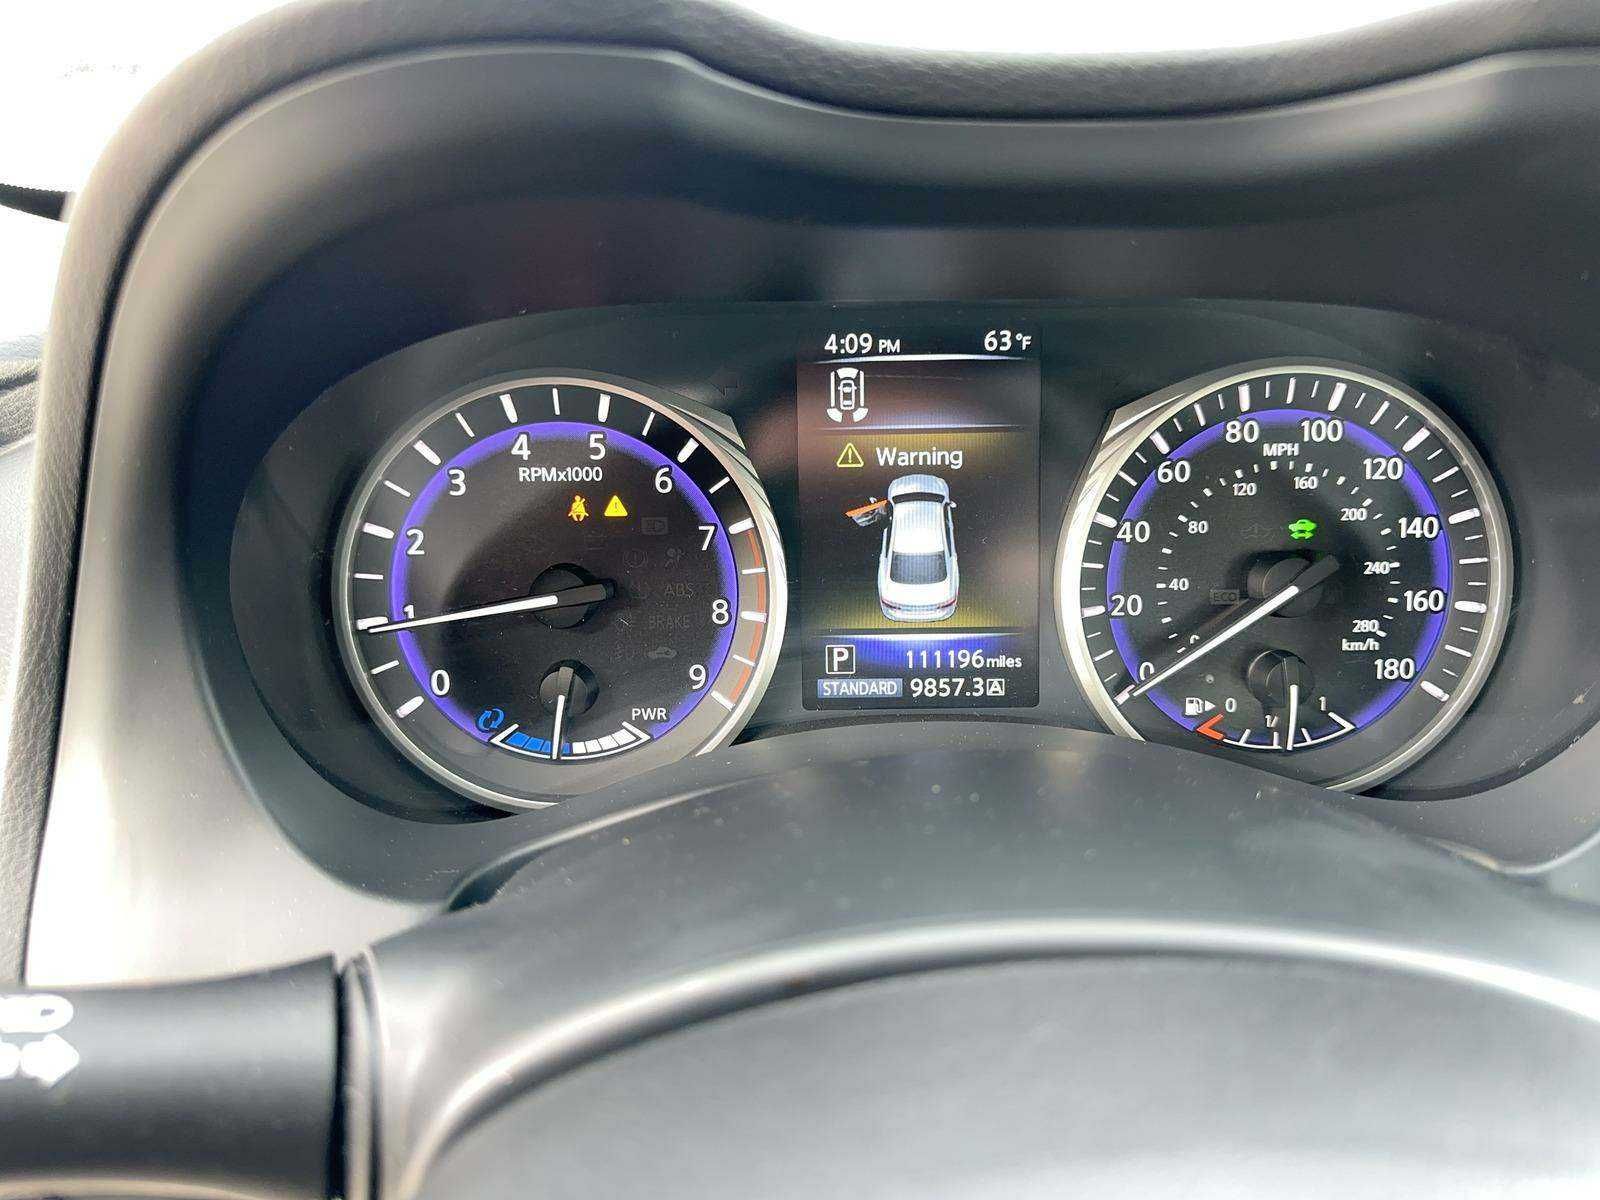 2015 INFINITI Q50 Hybrid Sport